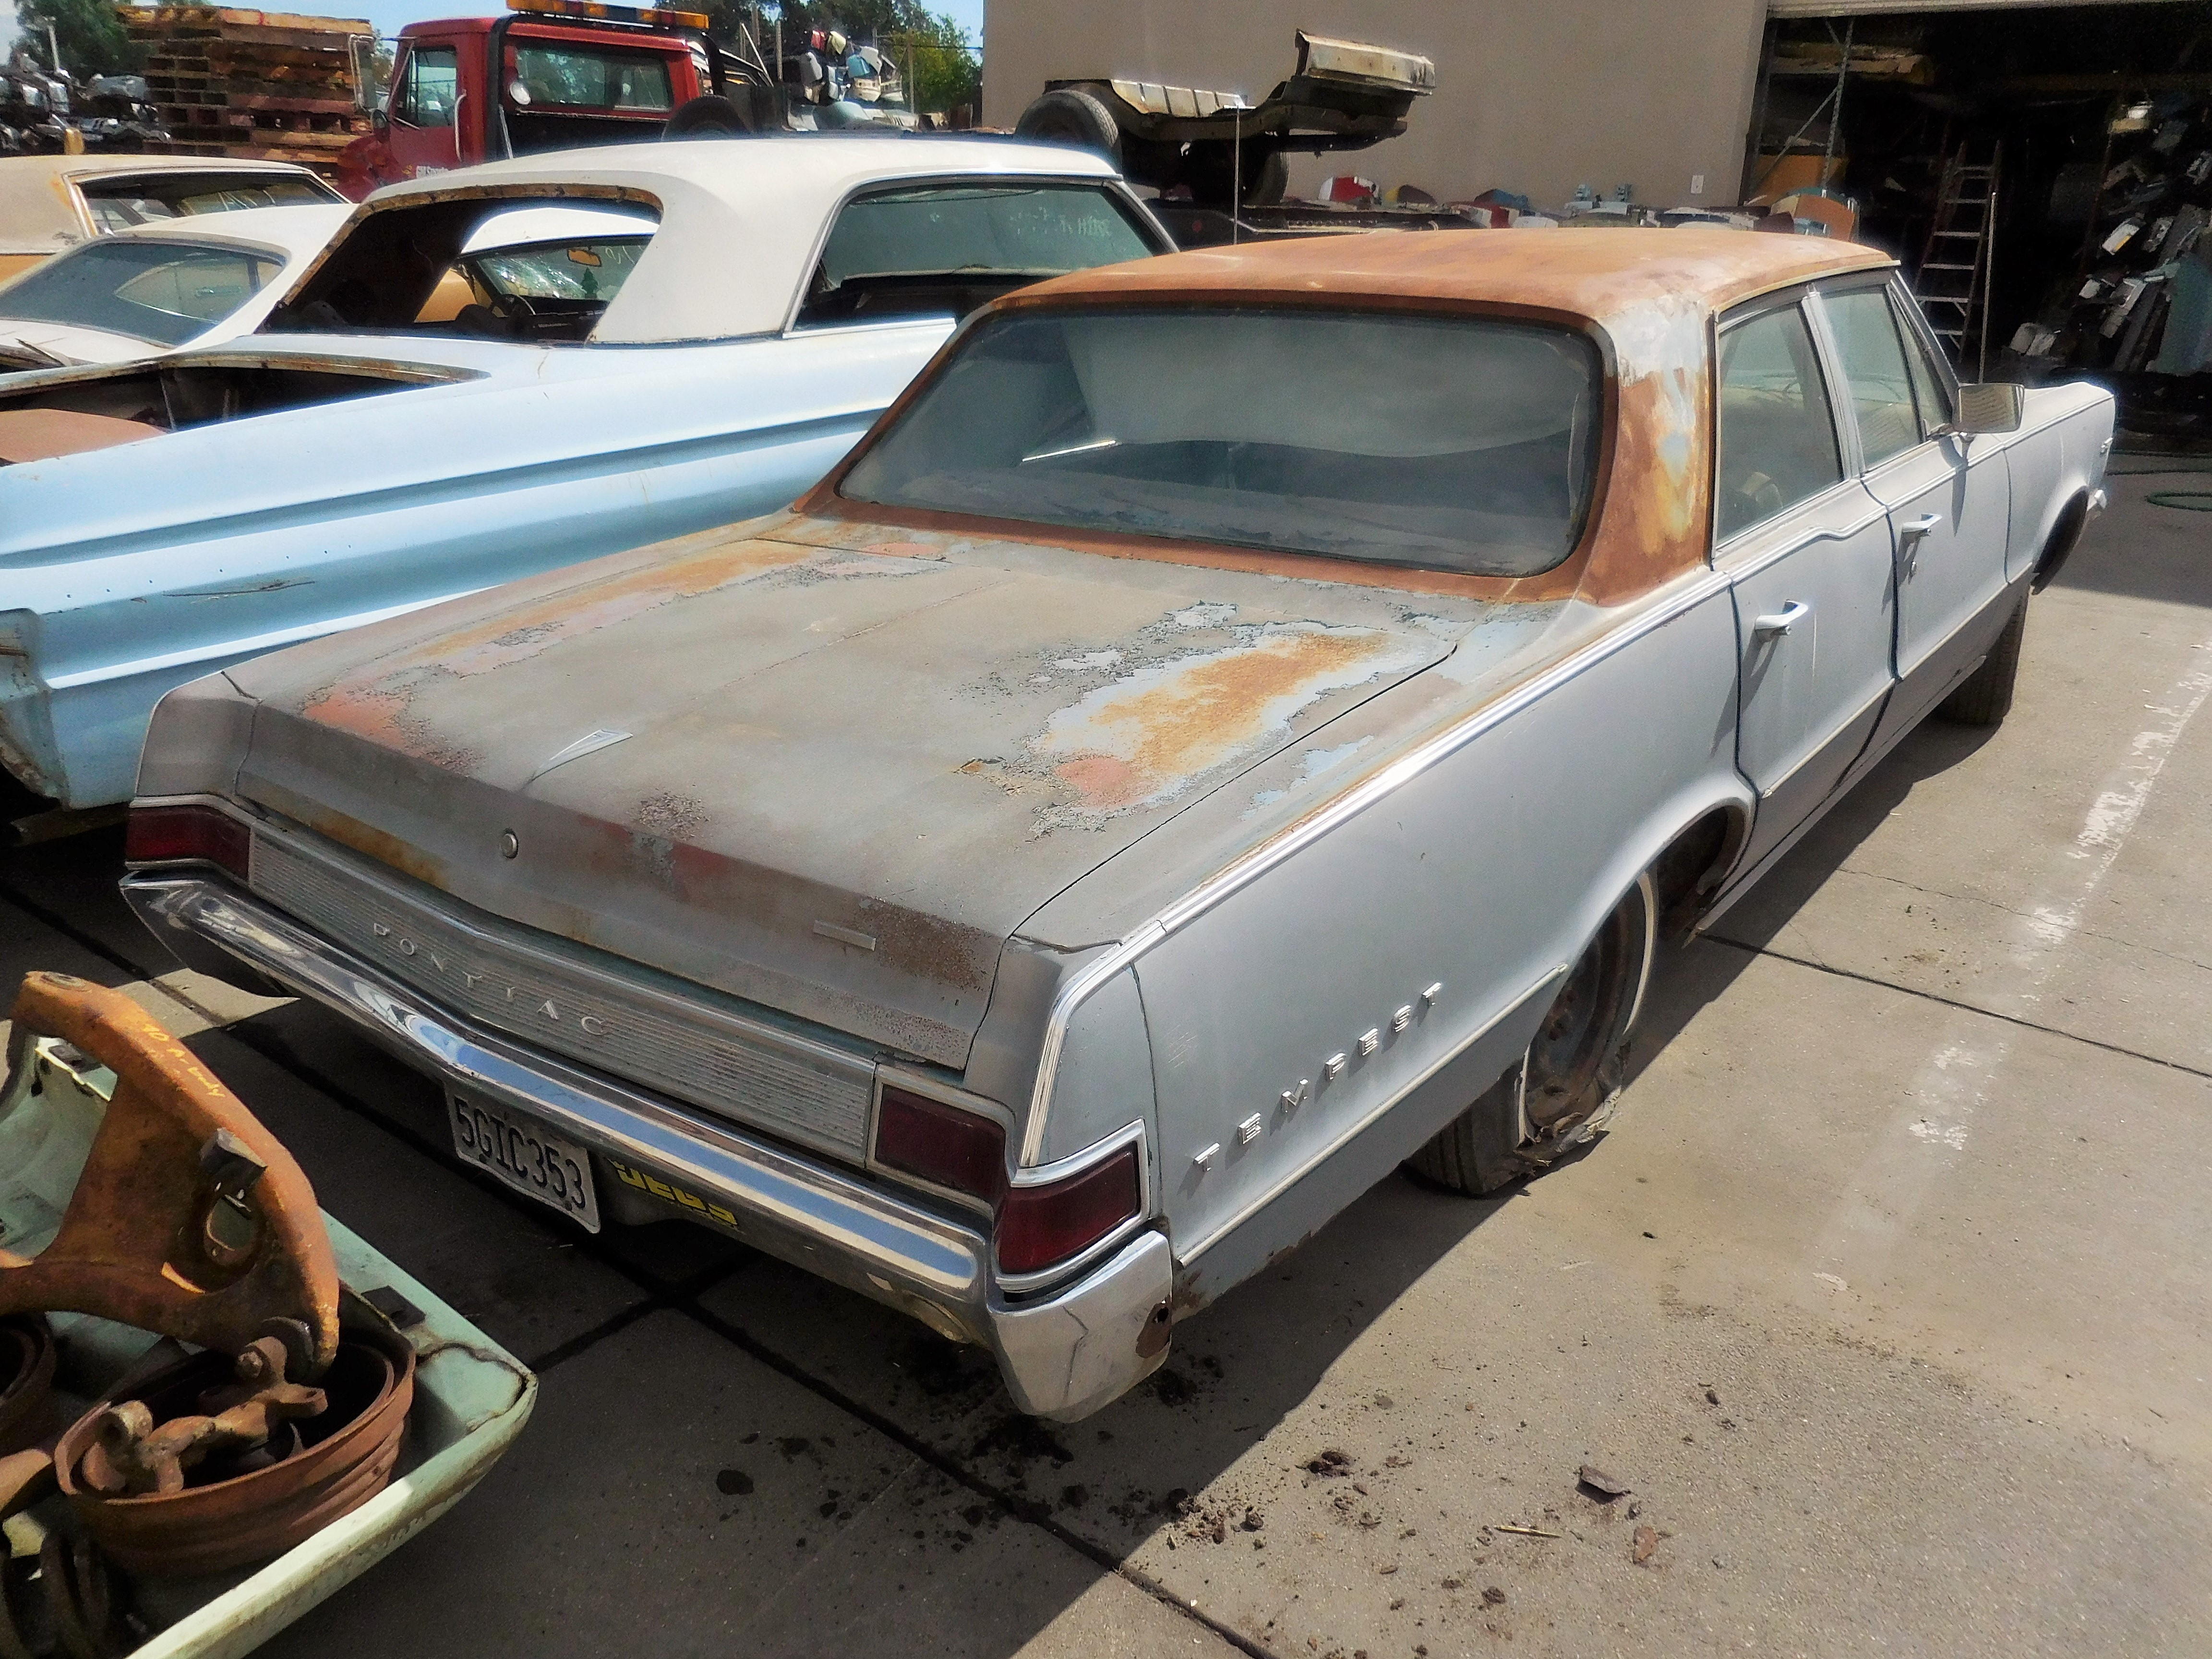 parts, car,1965, Pontiac, Tempest, 326, AT,bumper,front,hood,fender,glass,deck,lid,trim,roof,326,frame,suspension,front,rear,left,right,